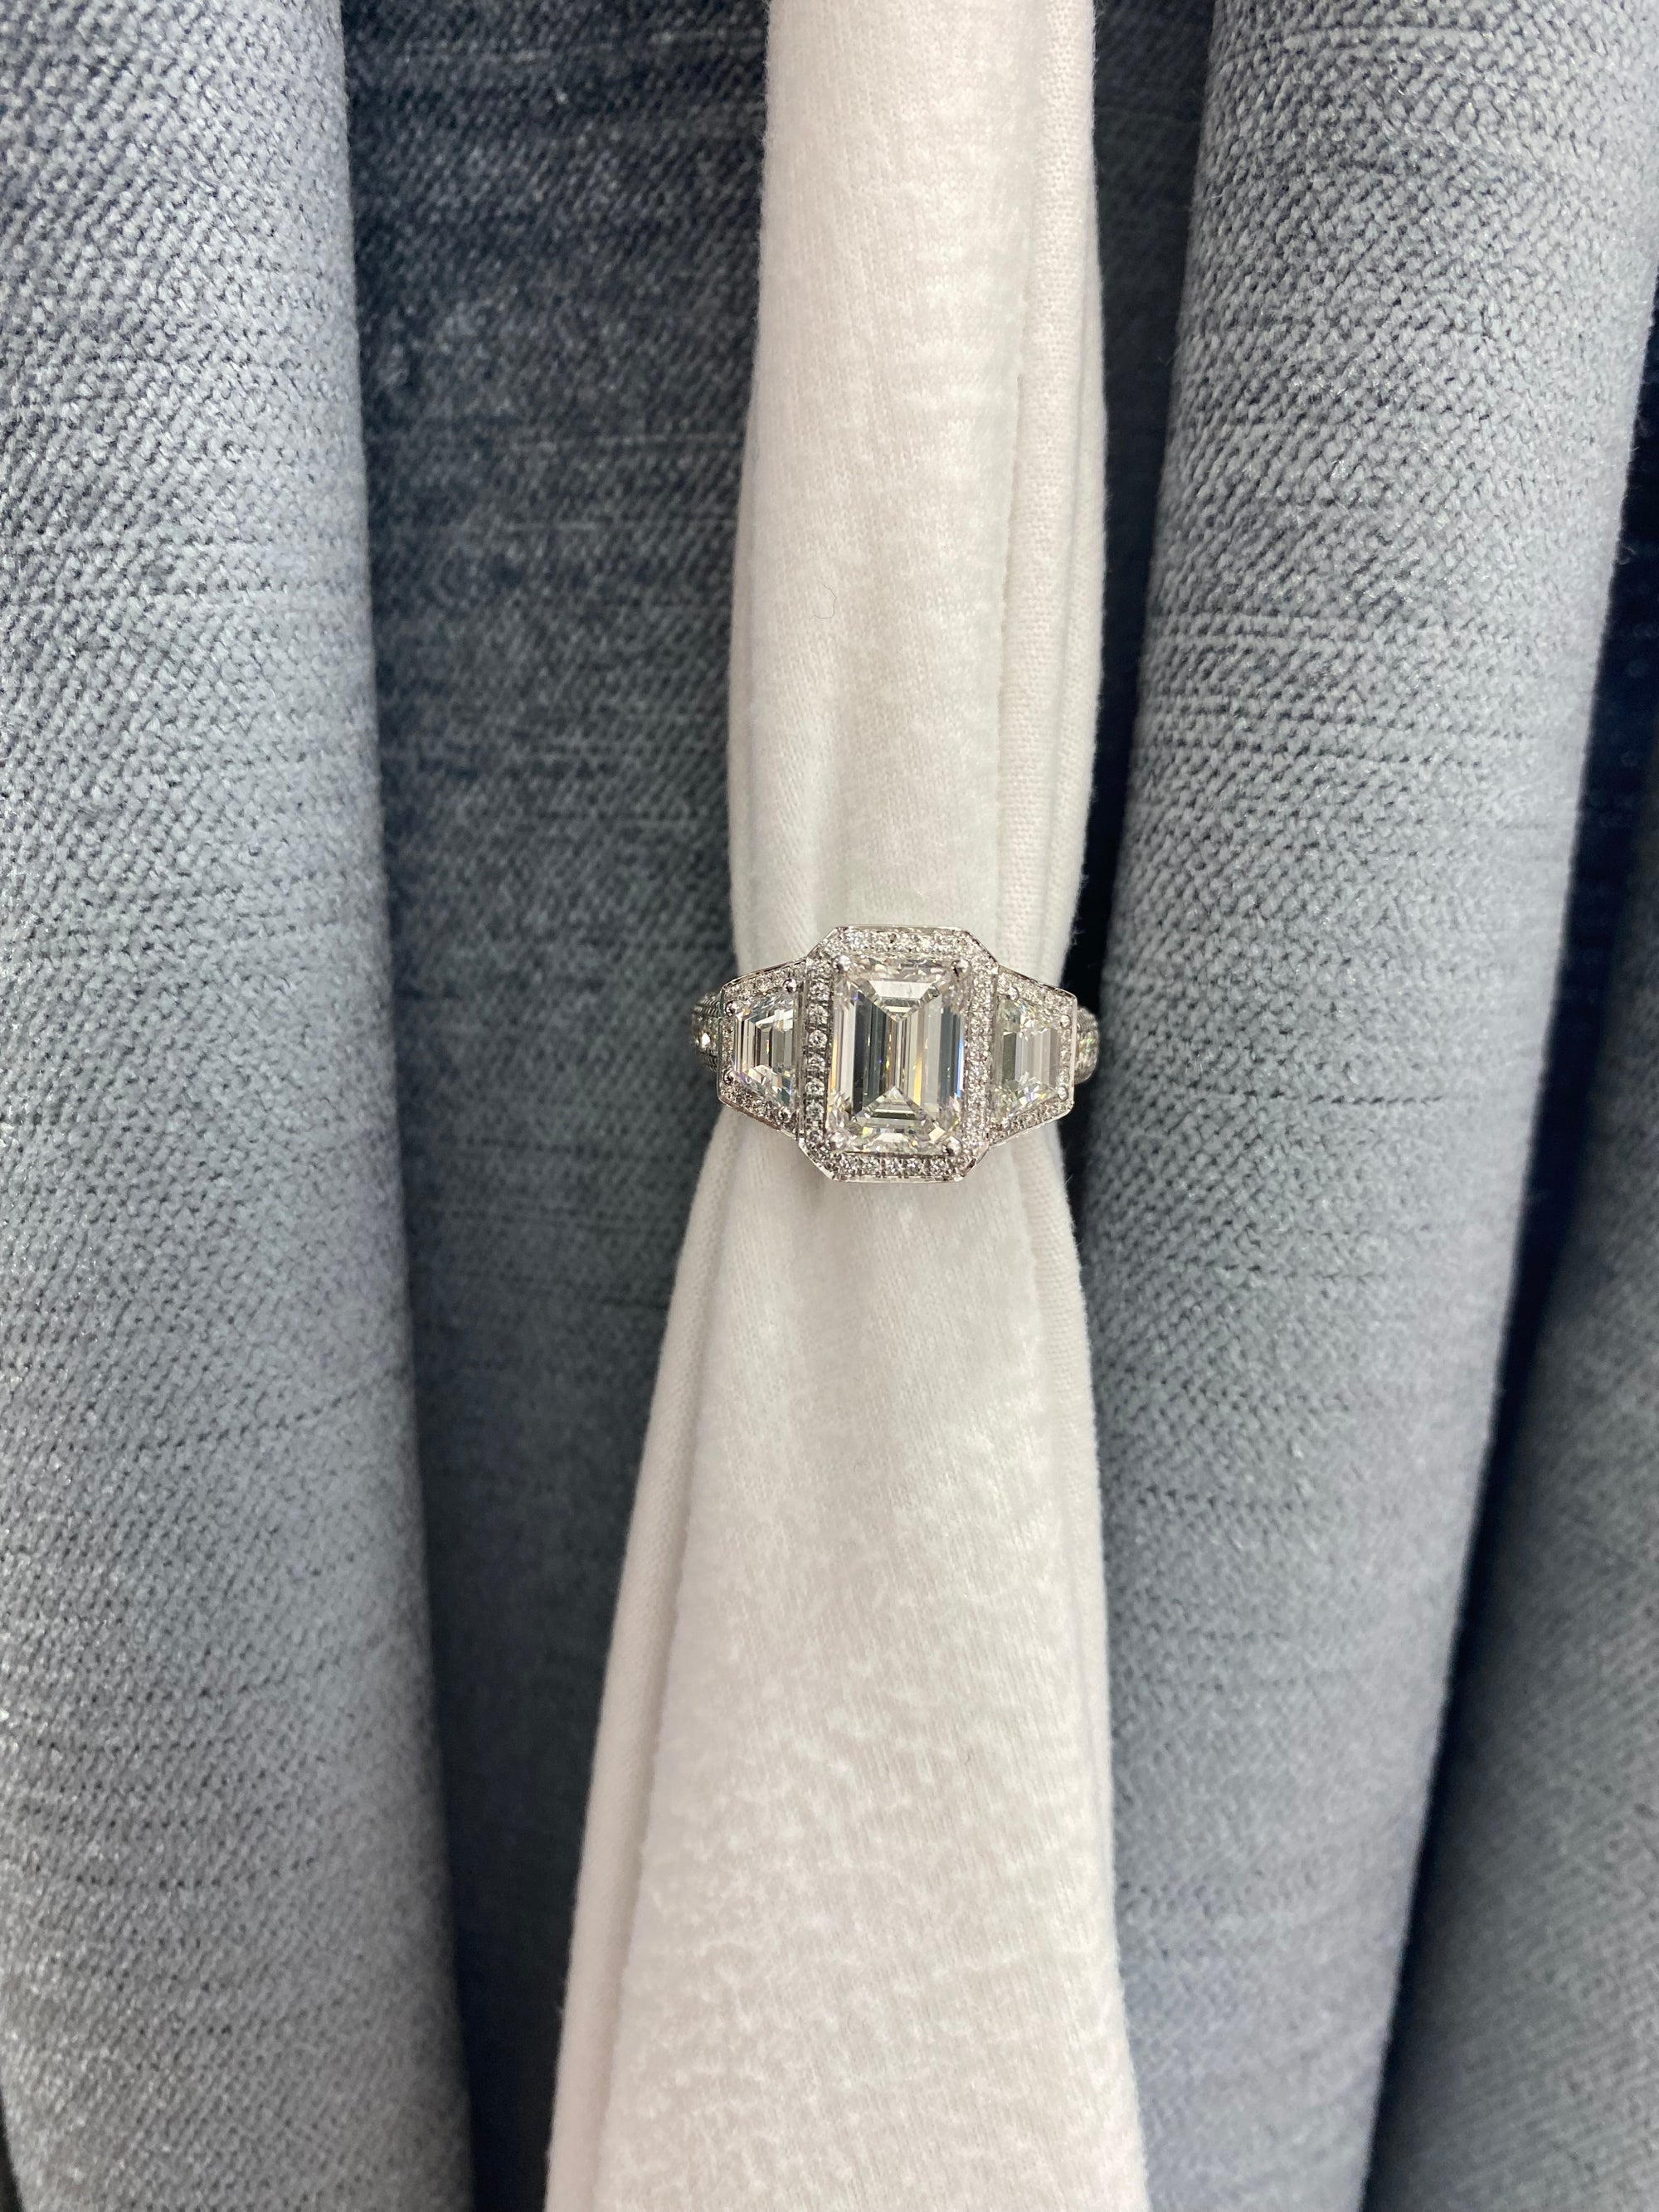 Sophia Emerald Cut Engagement Ring